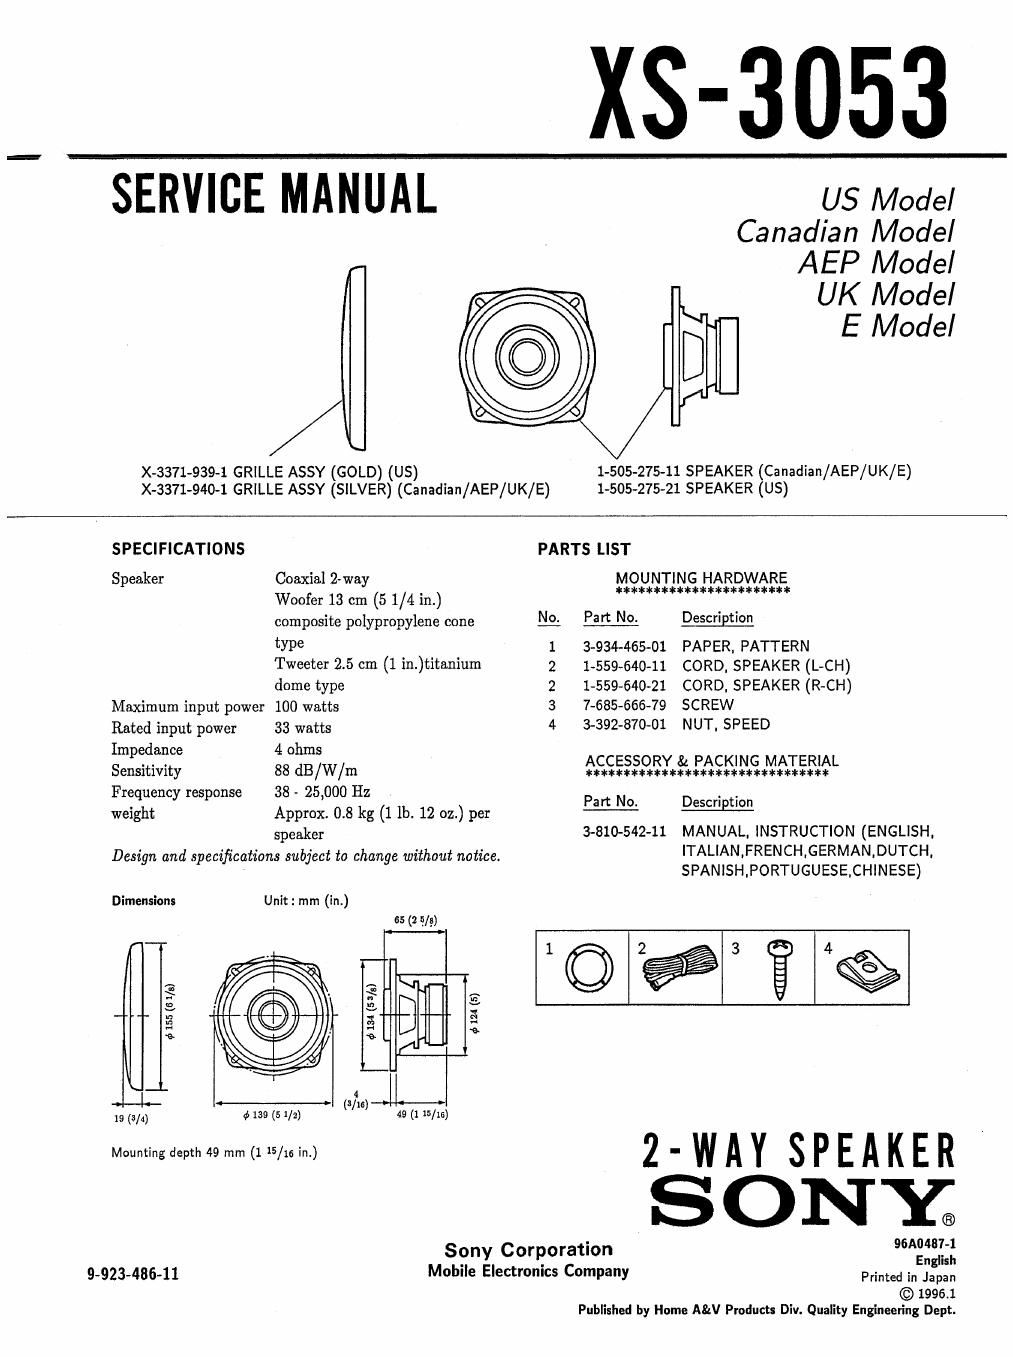 sony xs 3053 service manual